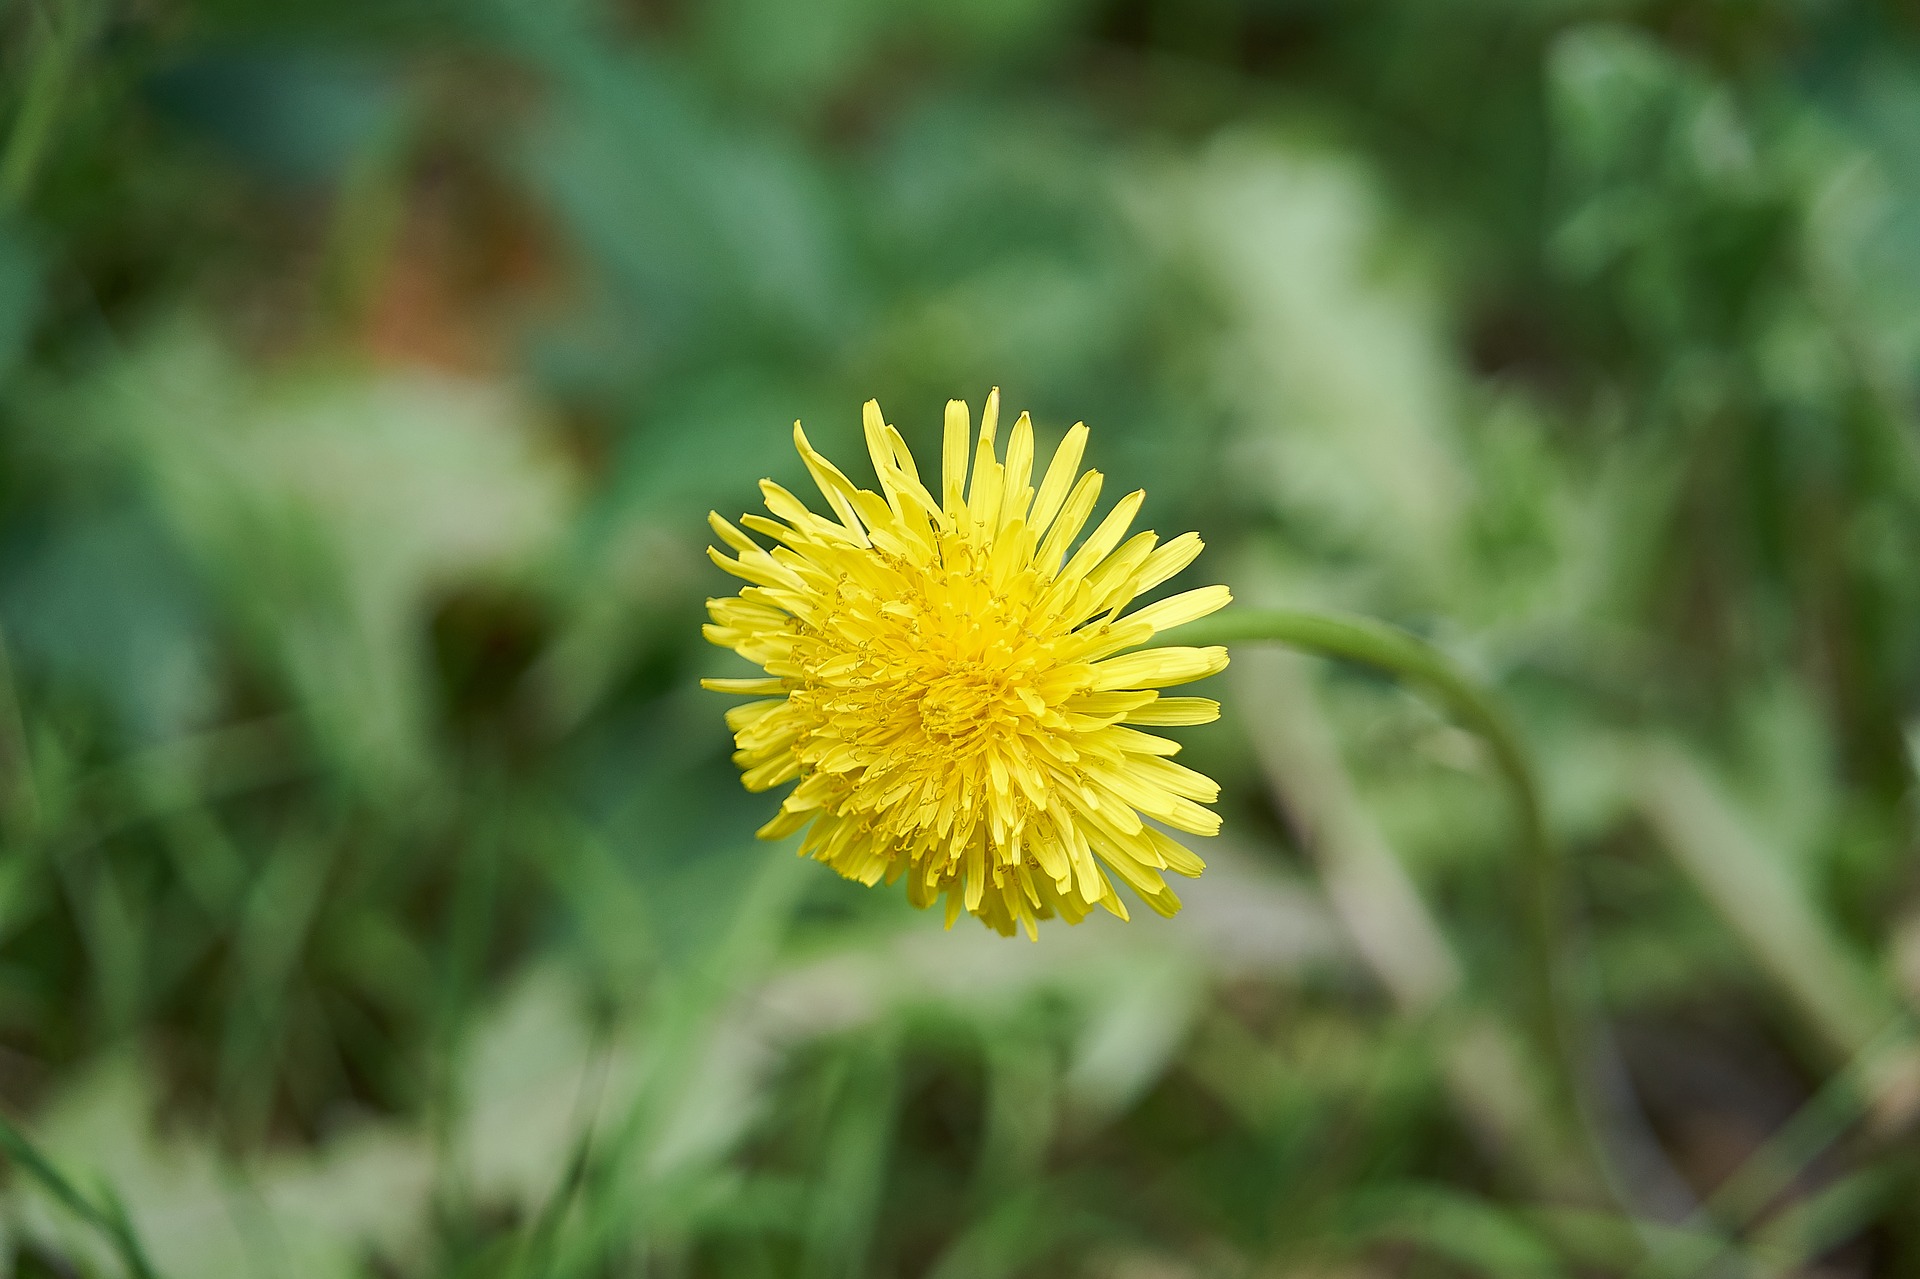 Photo of dandelion in grass